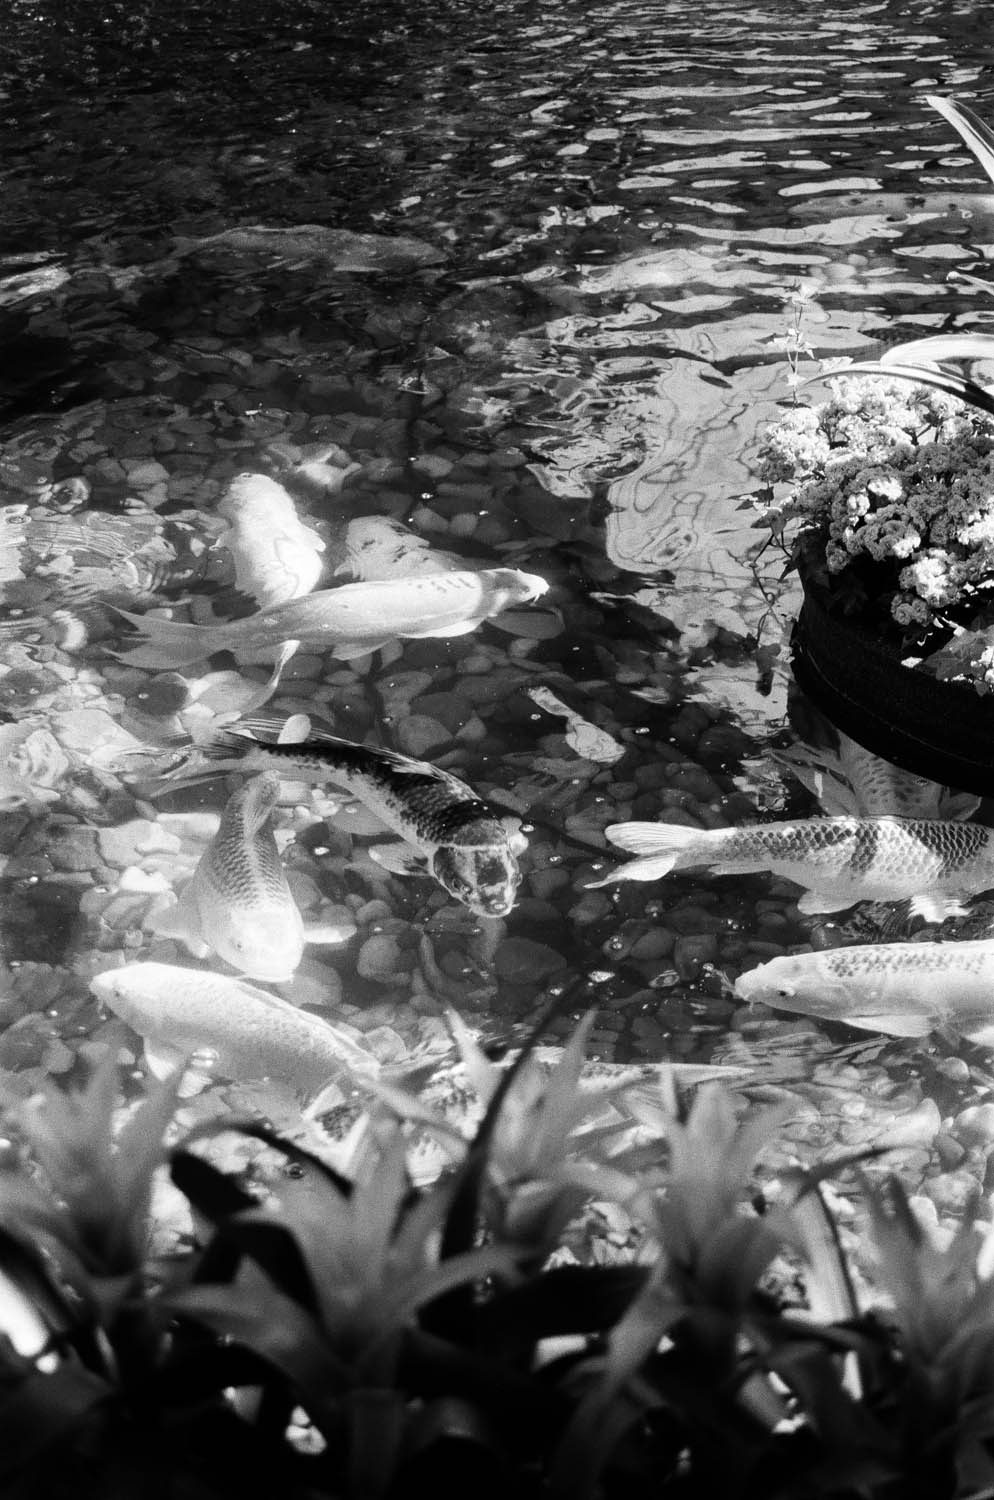 Koi pond at the Bellagio's conservatory in Las Vegas. Nikon N65.